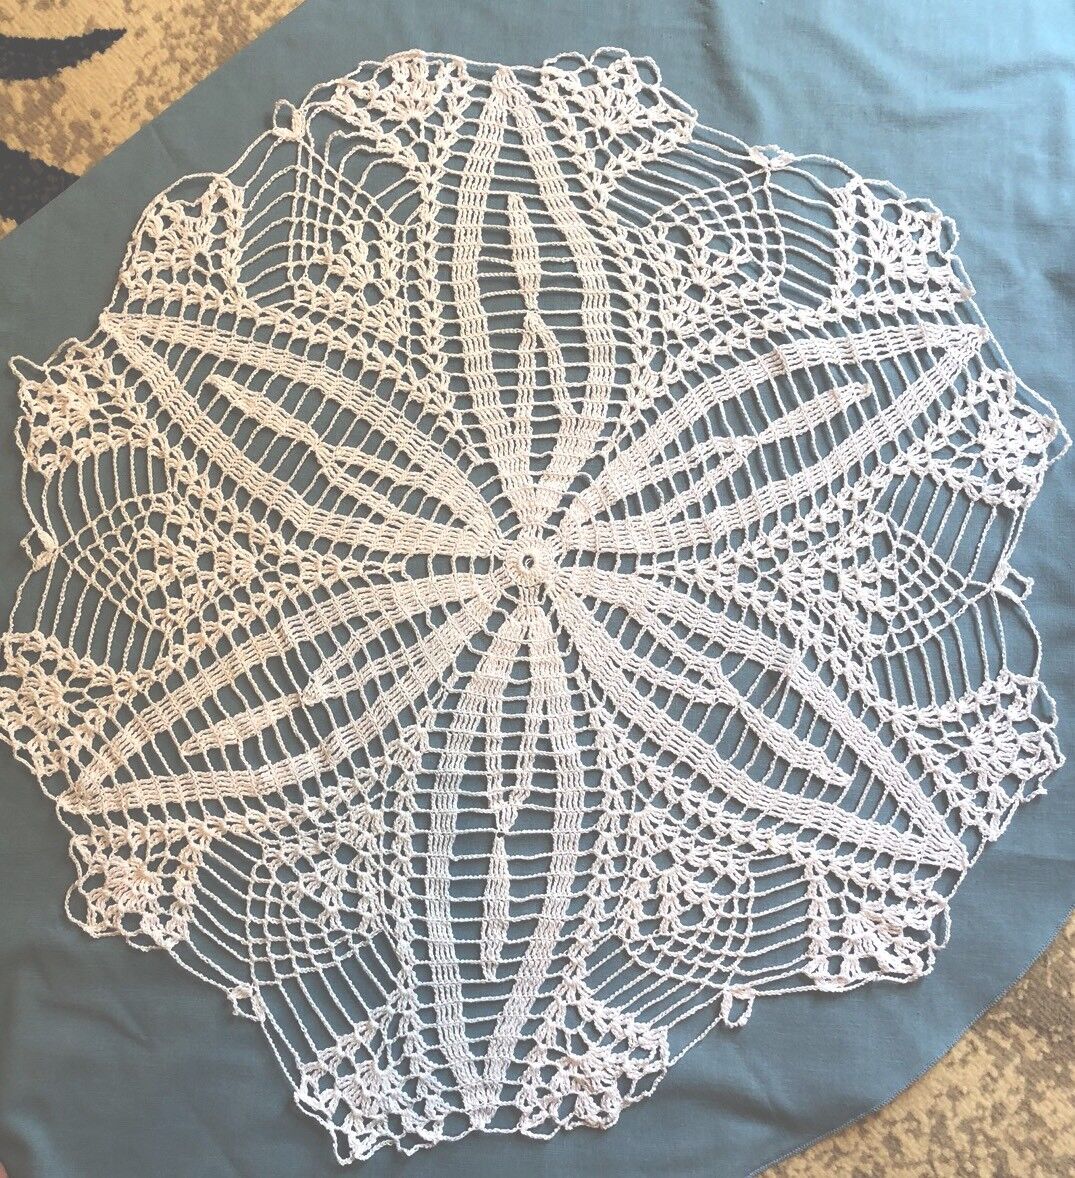 Handmade Lace Crochet Doily Tablecloth Baltimore shopping Mall Decor Wall Centerpiece